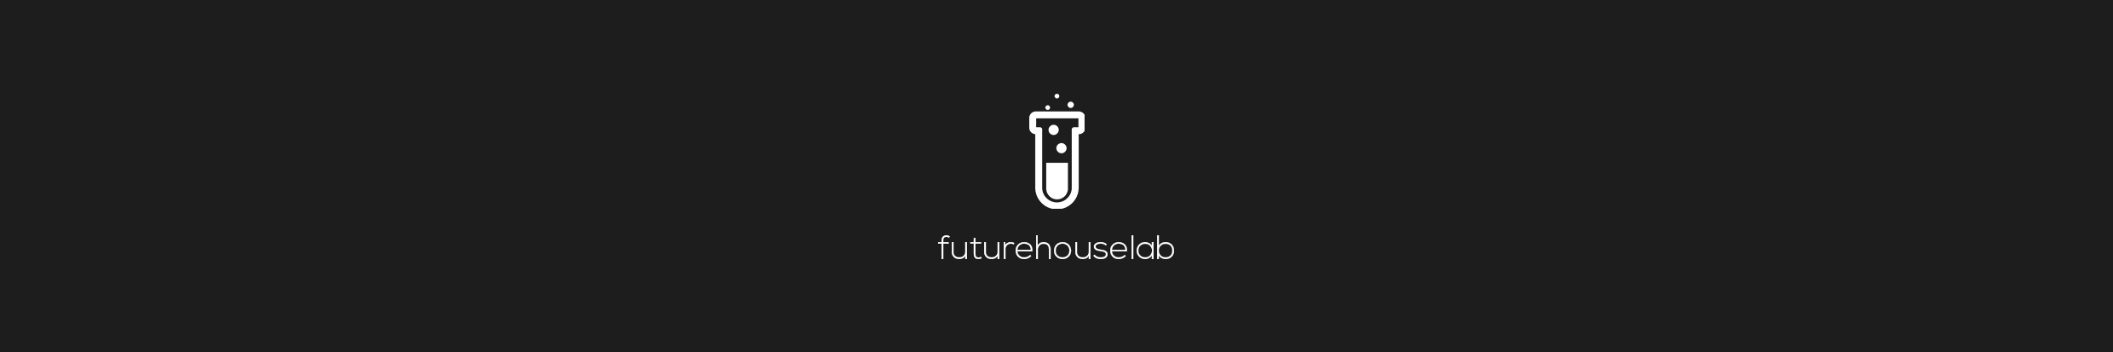 futurehouselab